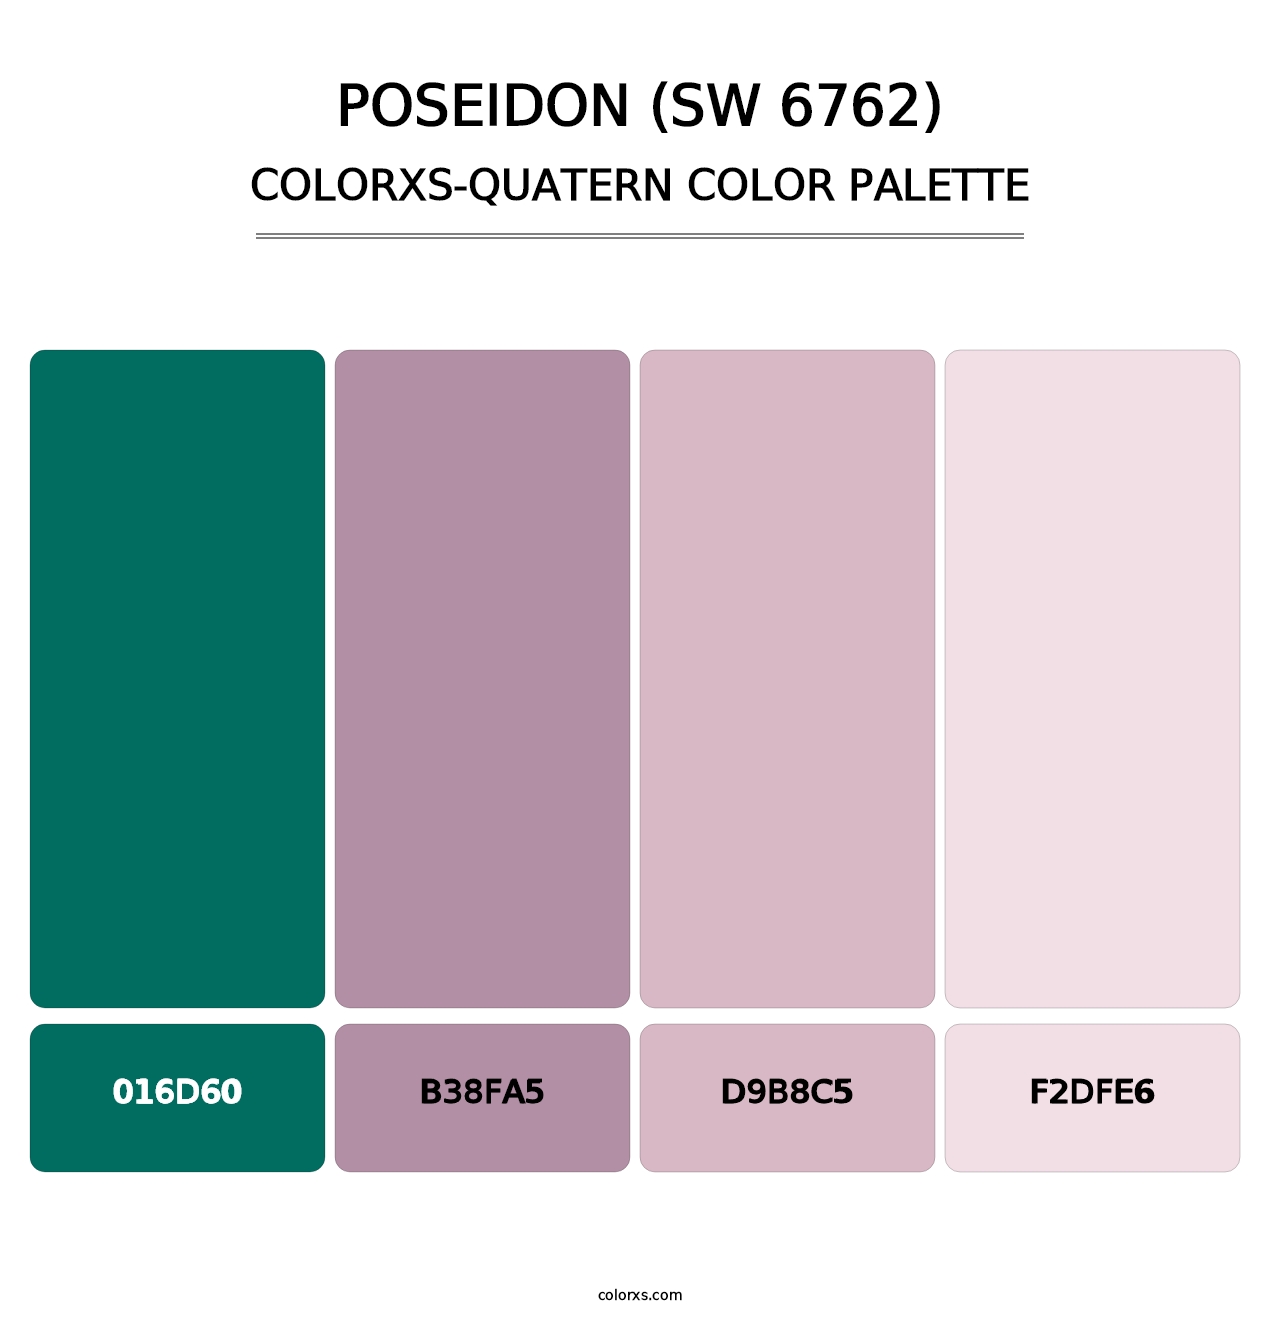 Poseidon (SW 6762) - Colorxs Quatern Palette